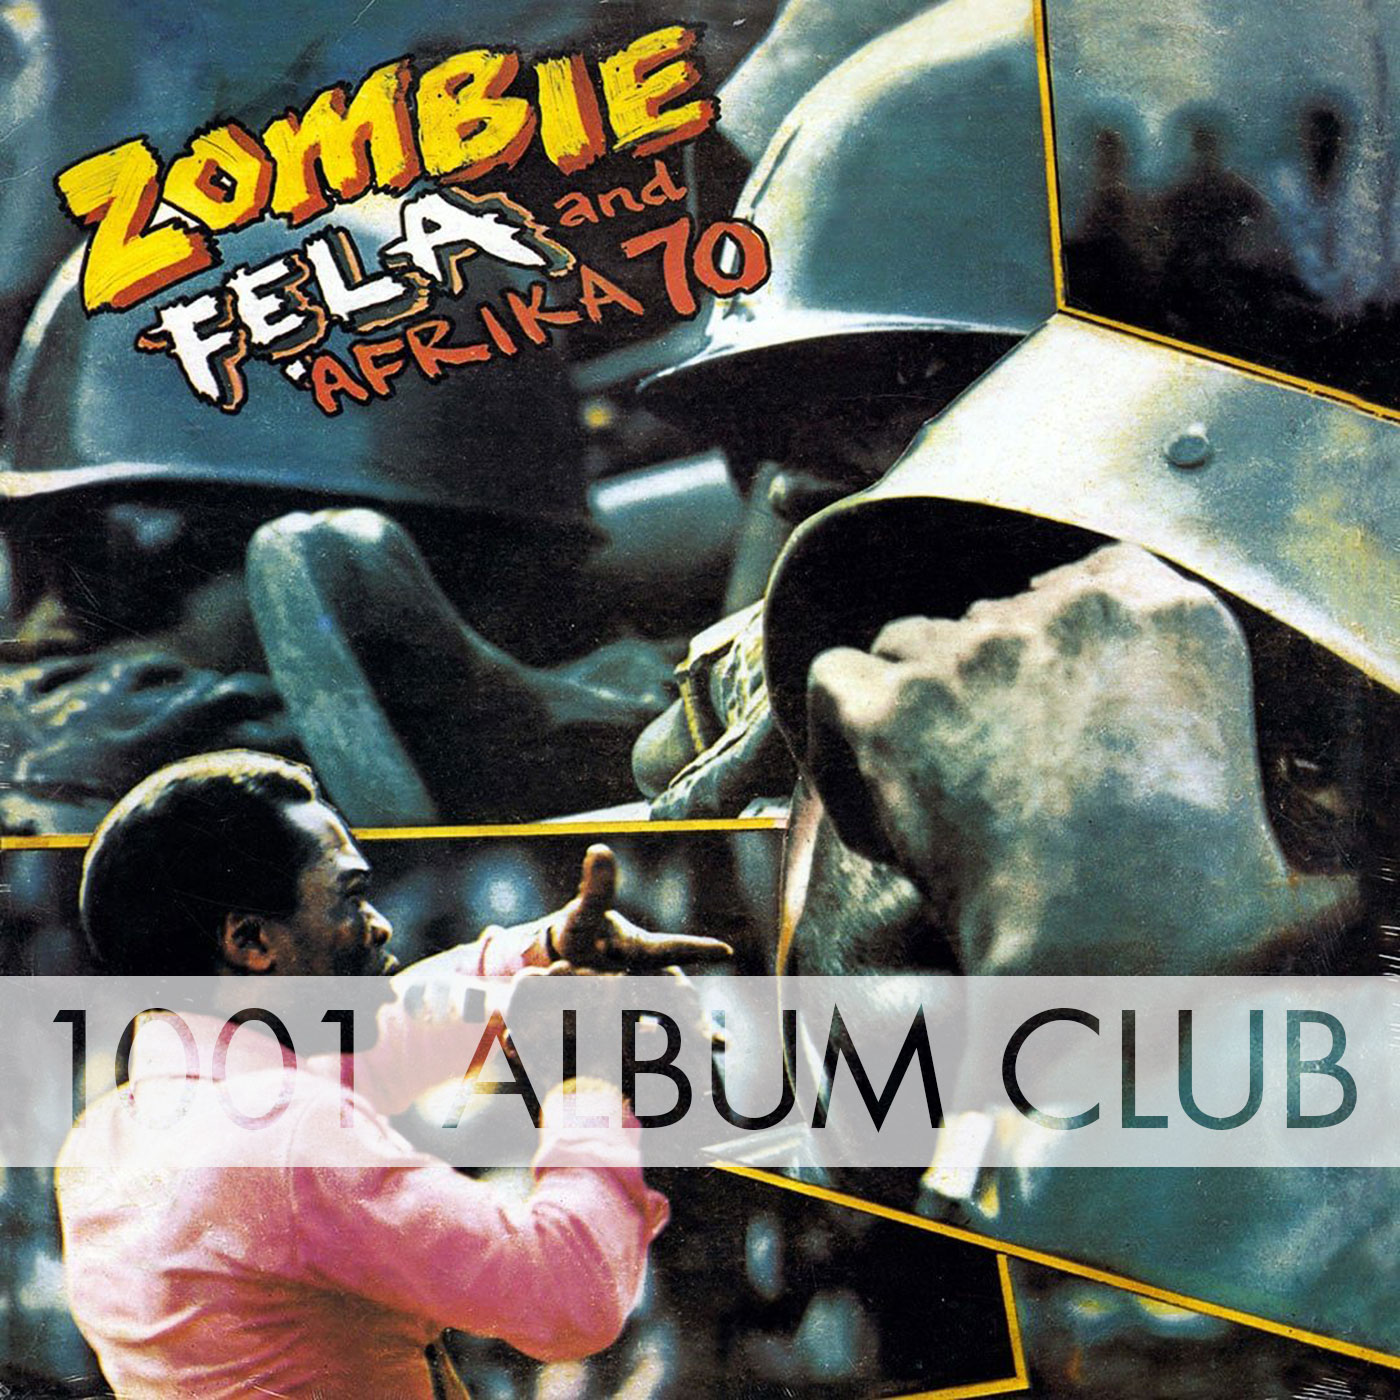 365 Fela Kuti & Afrika 70 – Zombie – 1001 Album Club